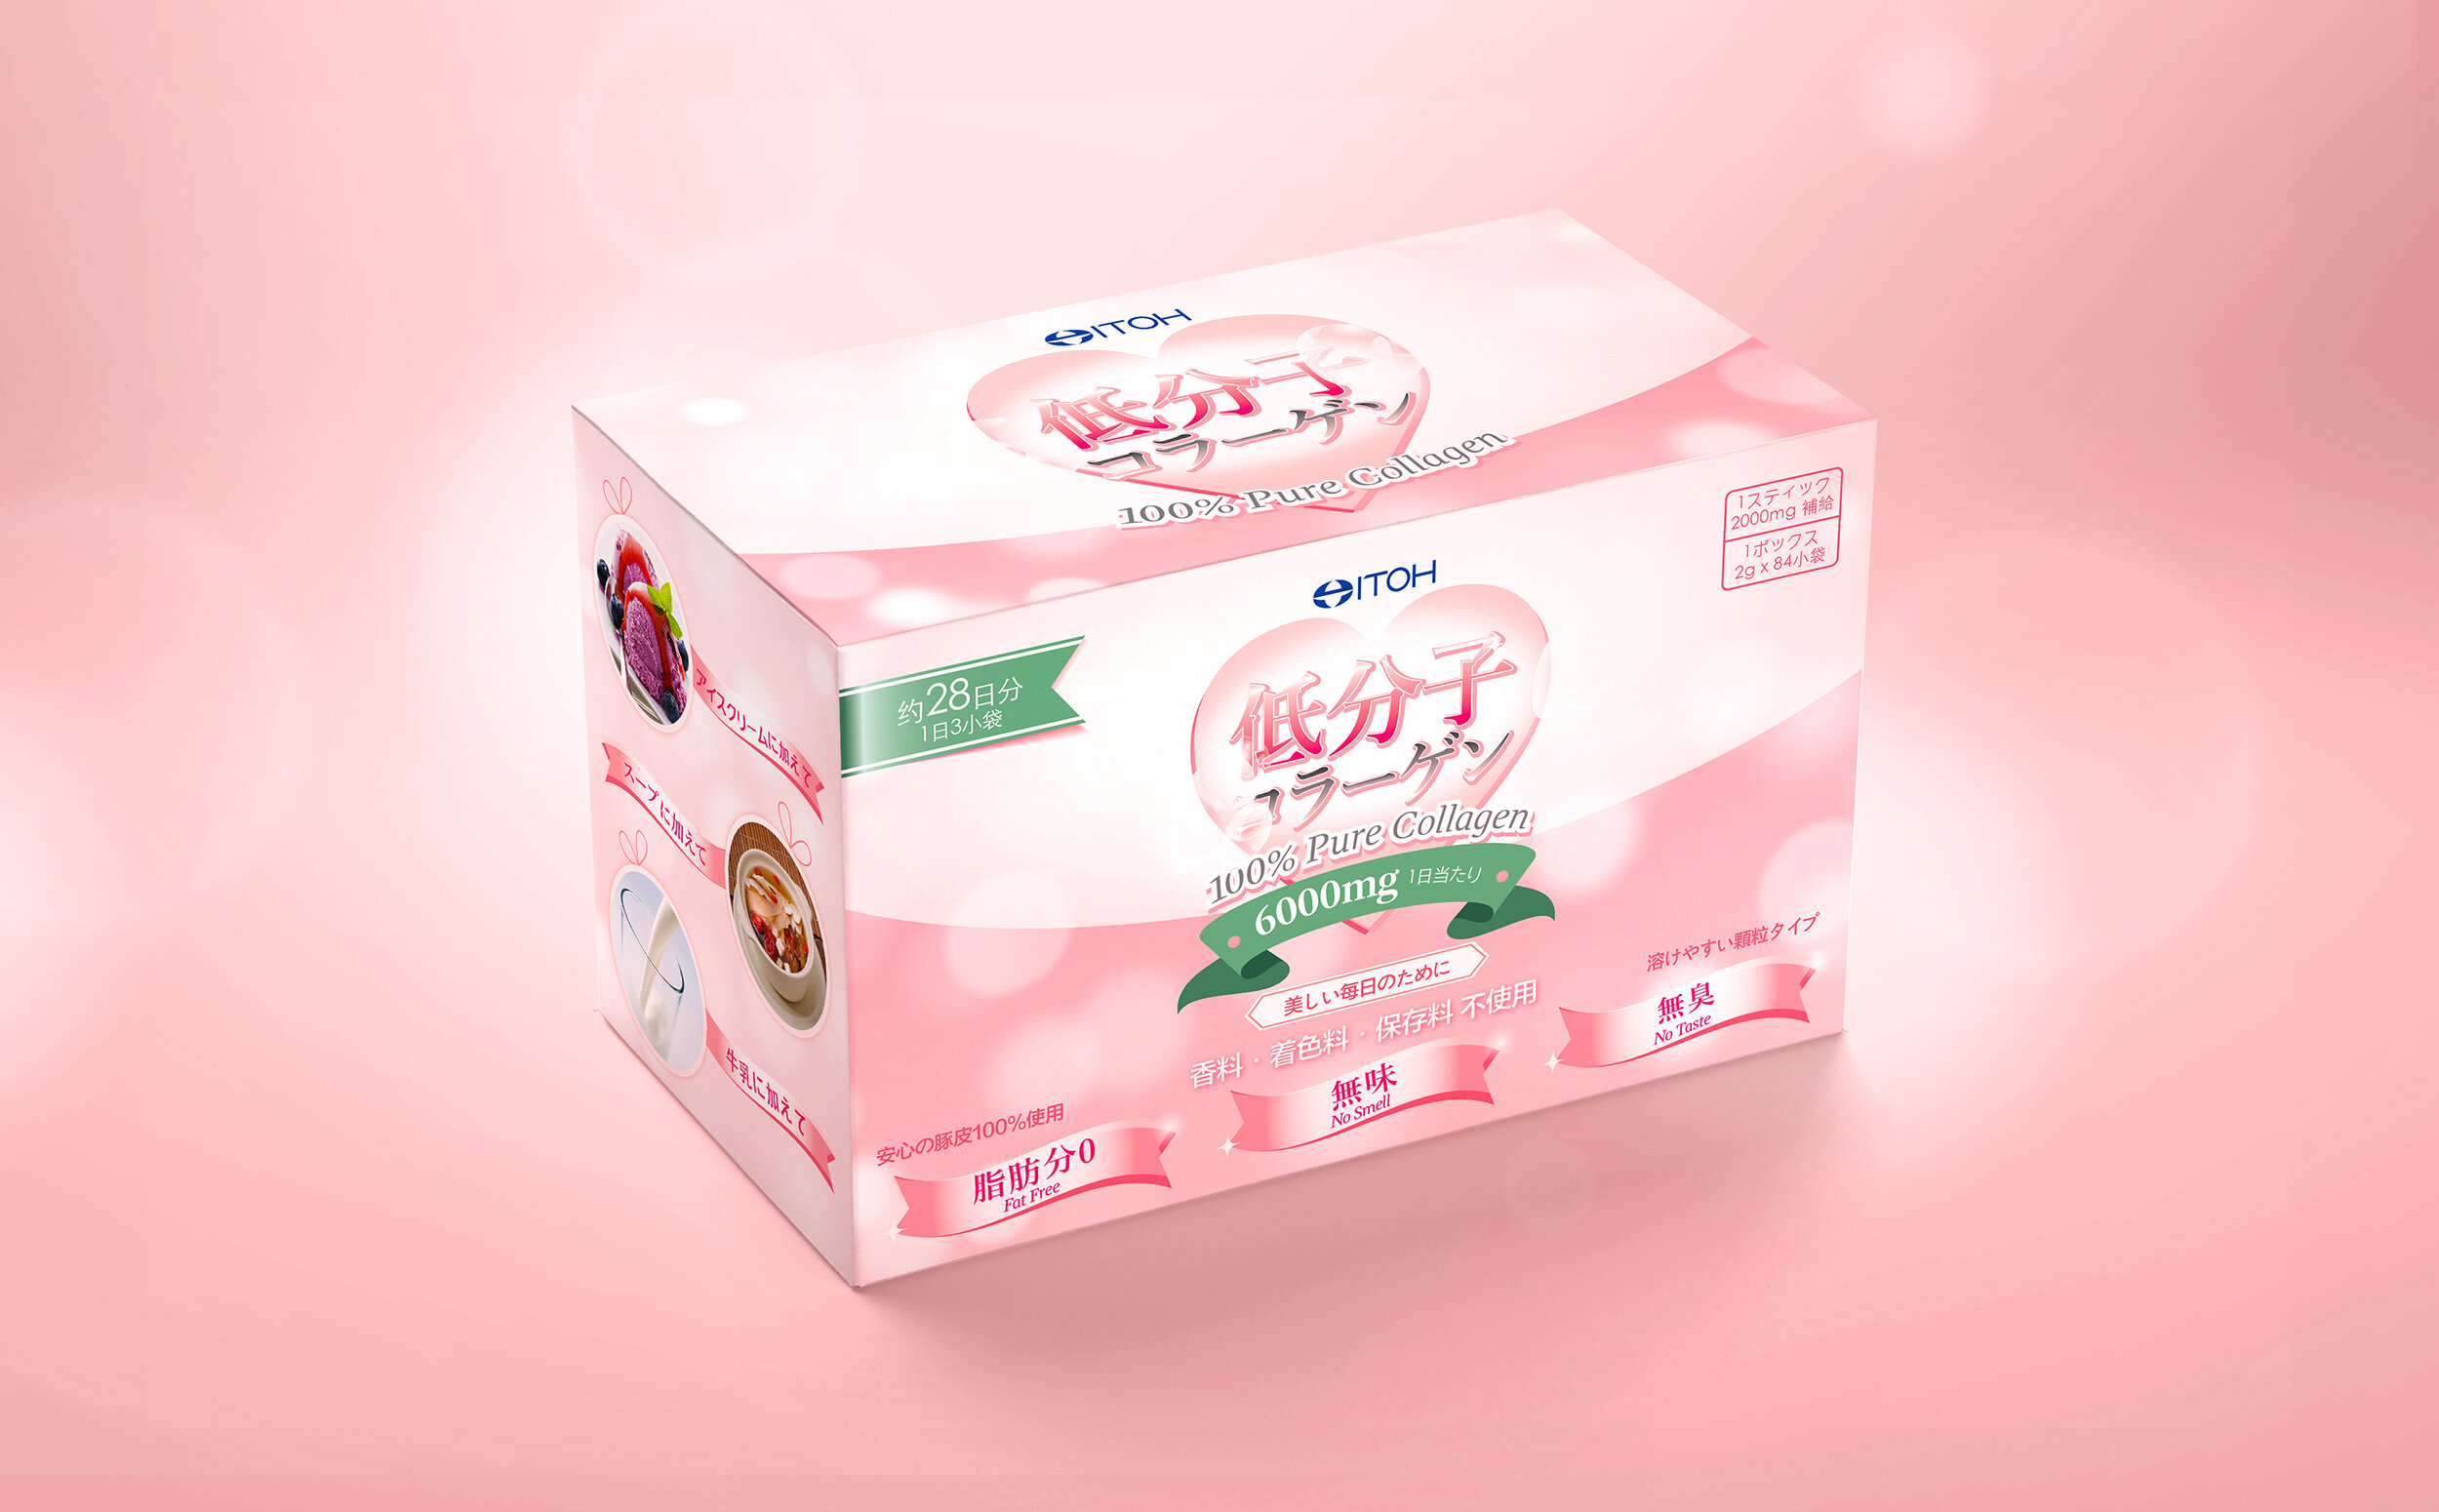 Ascen Resources 28 Days ITOH Collagen Carton Box (Packaging Design by YANA Singapore Freelance Designer).jpg